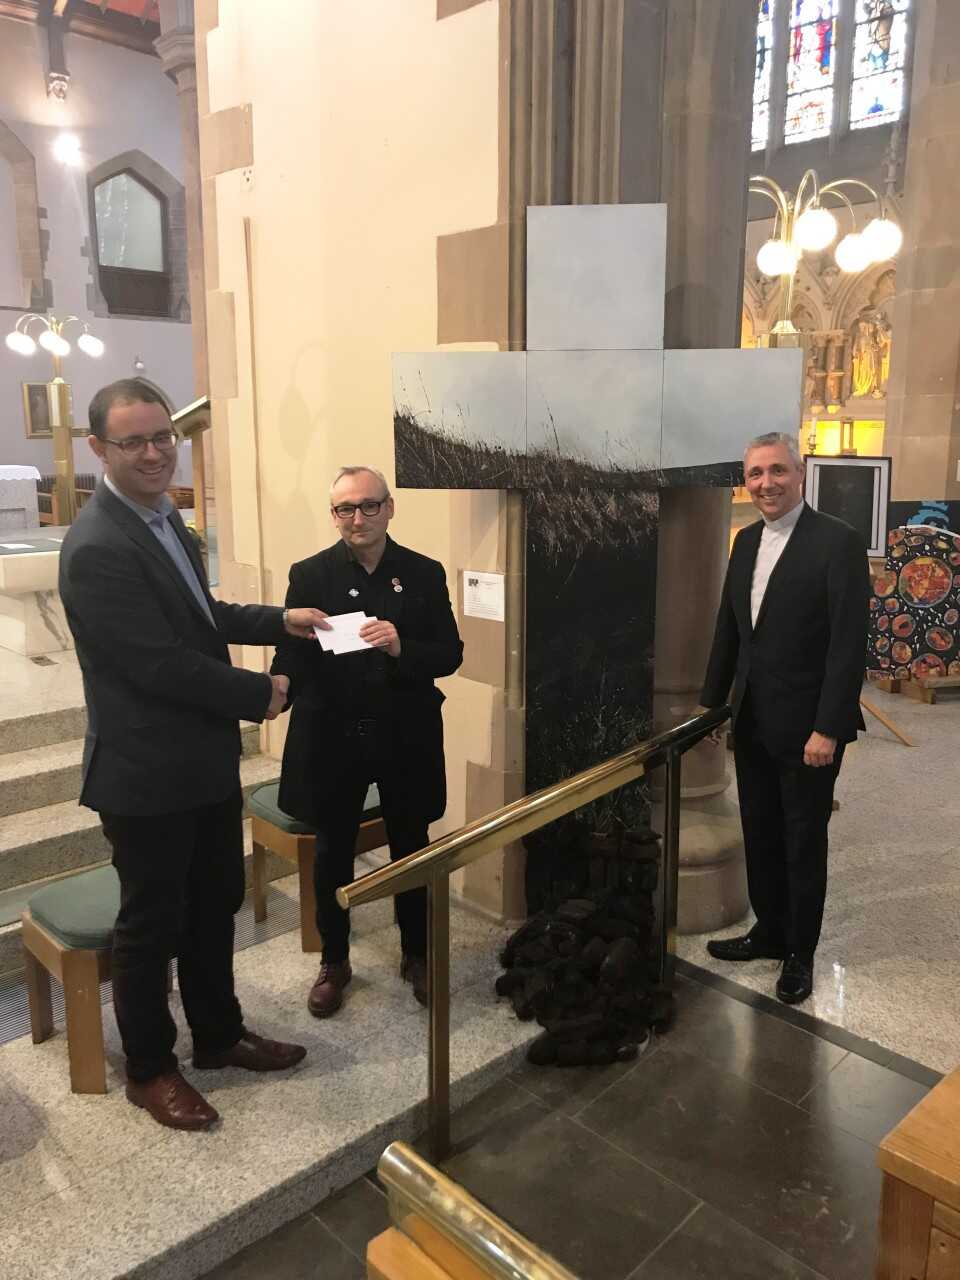 The Sister Aloysius Memorial Prize for Religious Art 2018